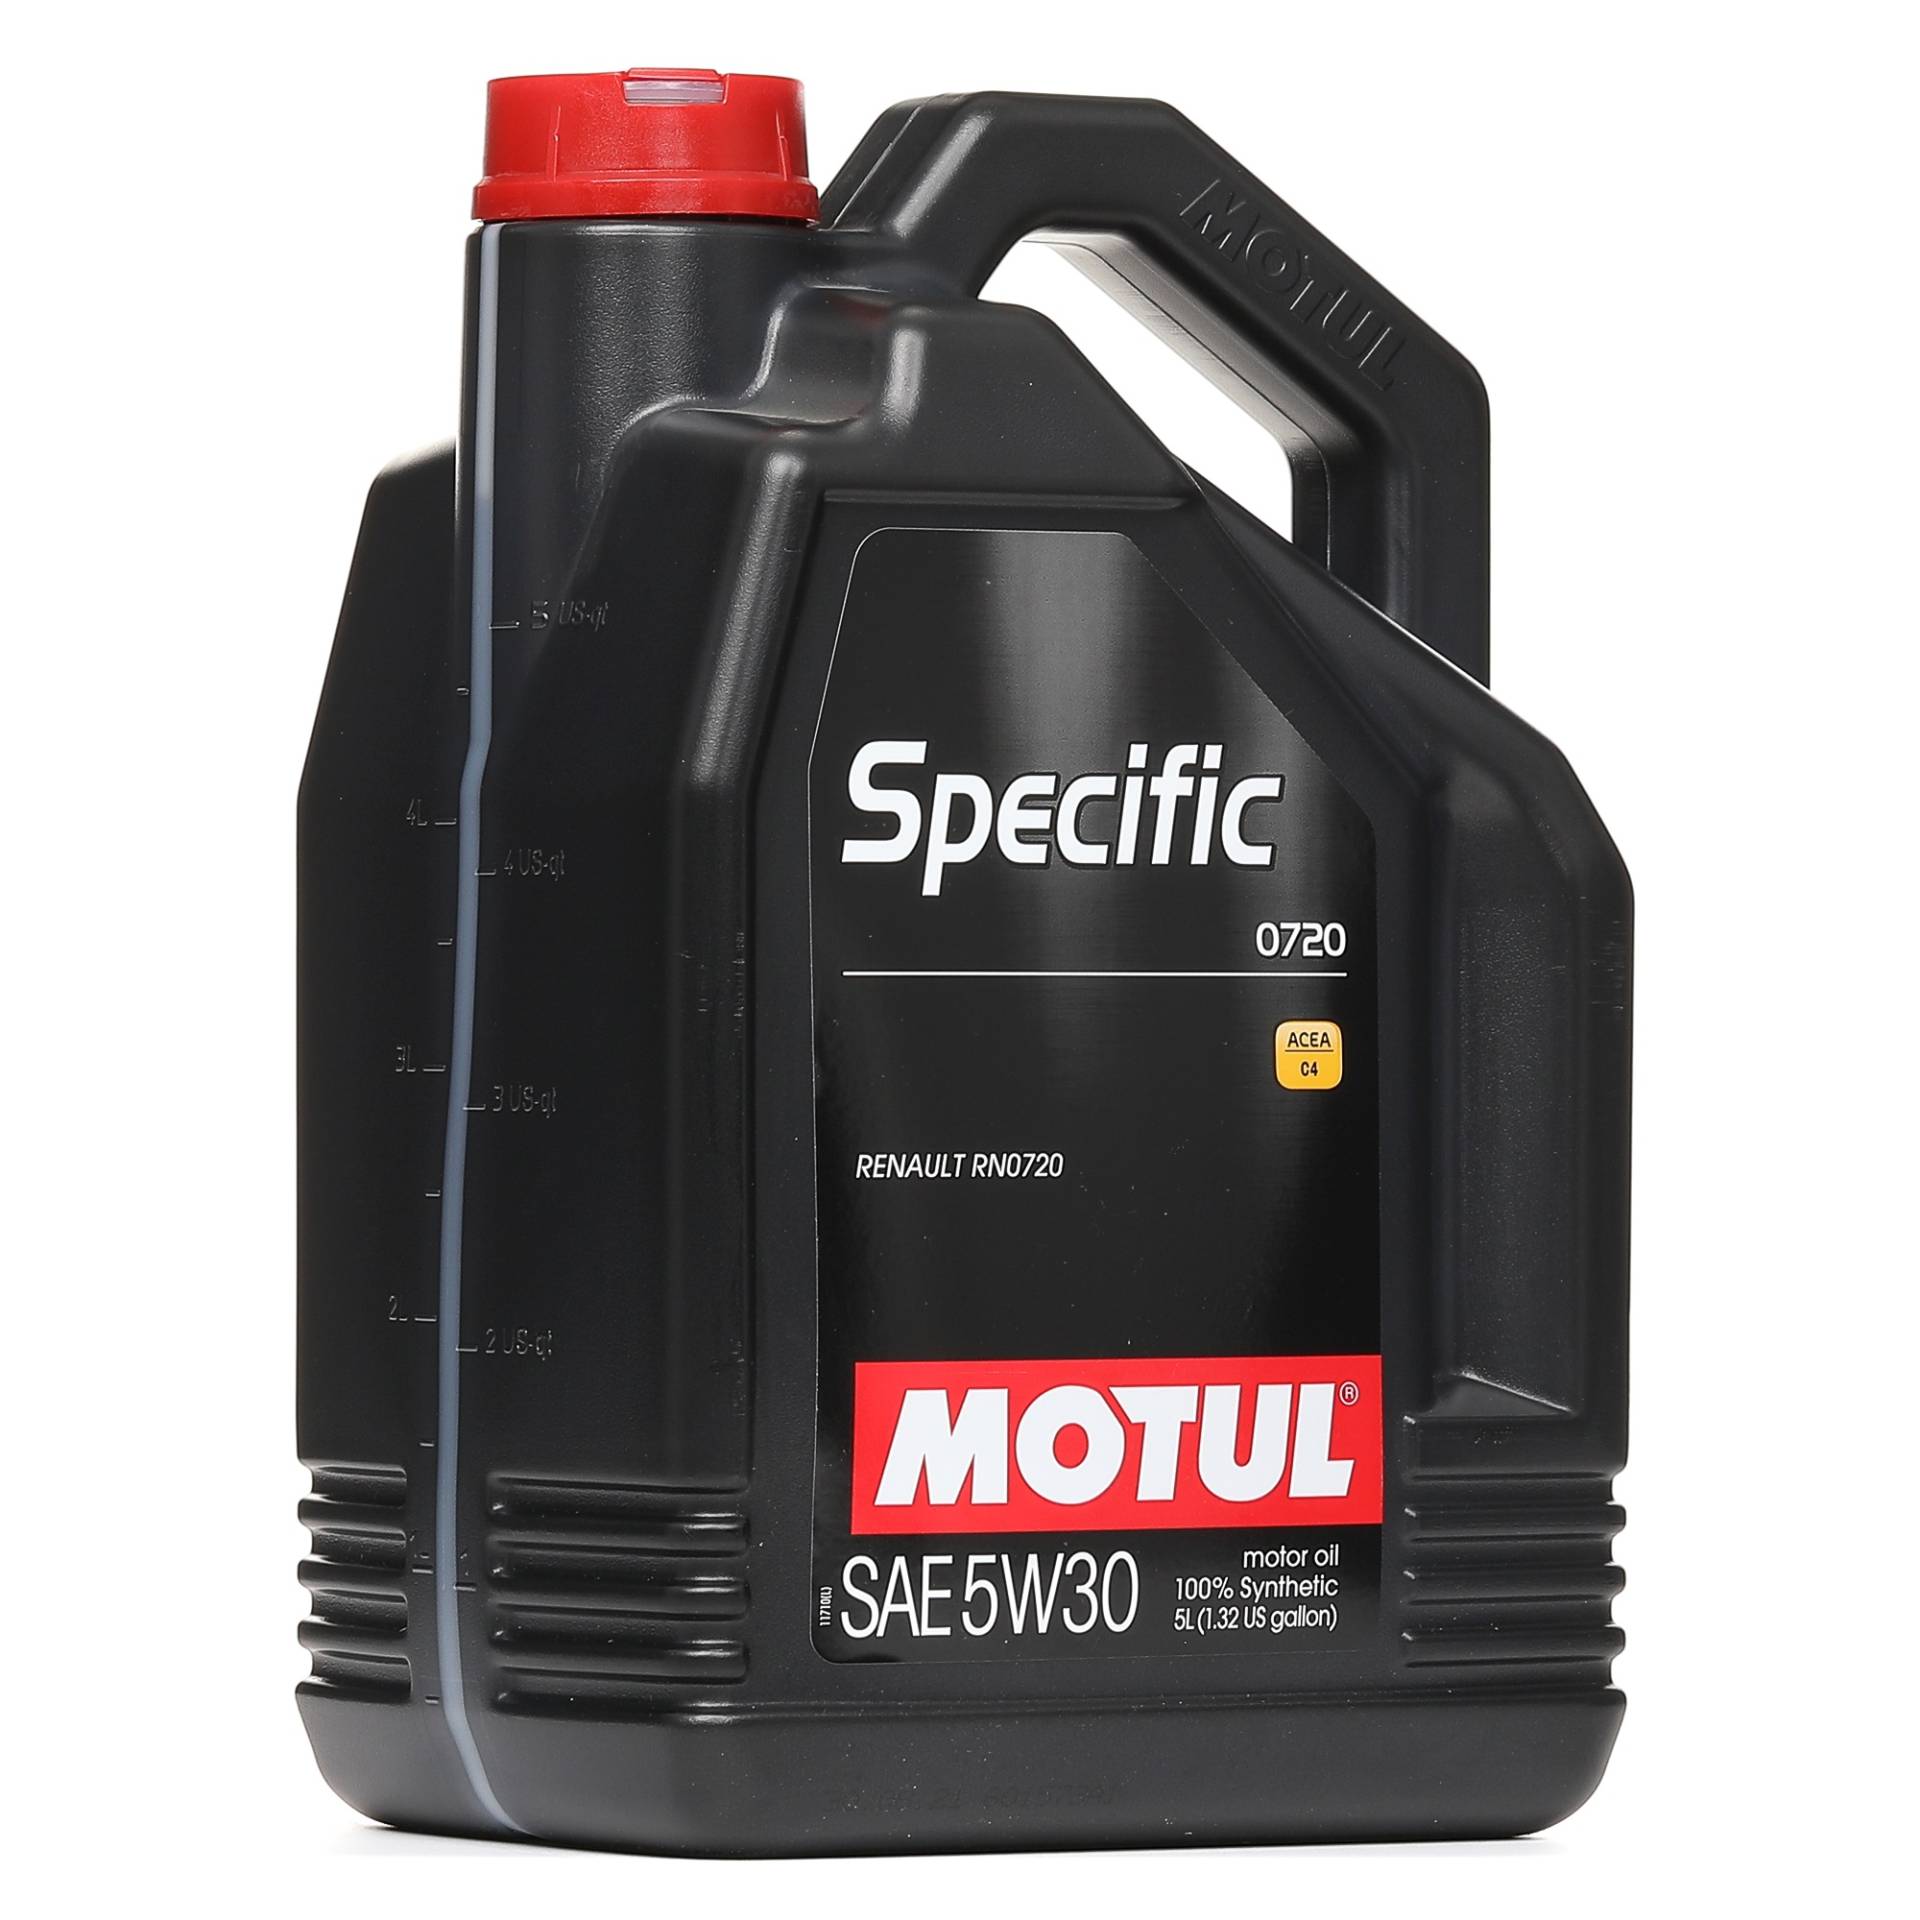 MOTUL Motoröl MERCEDES-BENZ,RENAULT,FIAT 109241 Motorenöl,Öl,Öl für Motor von MOTUL